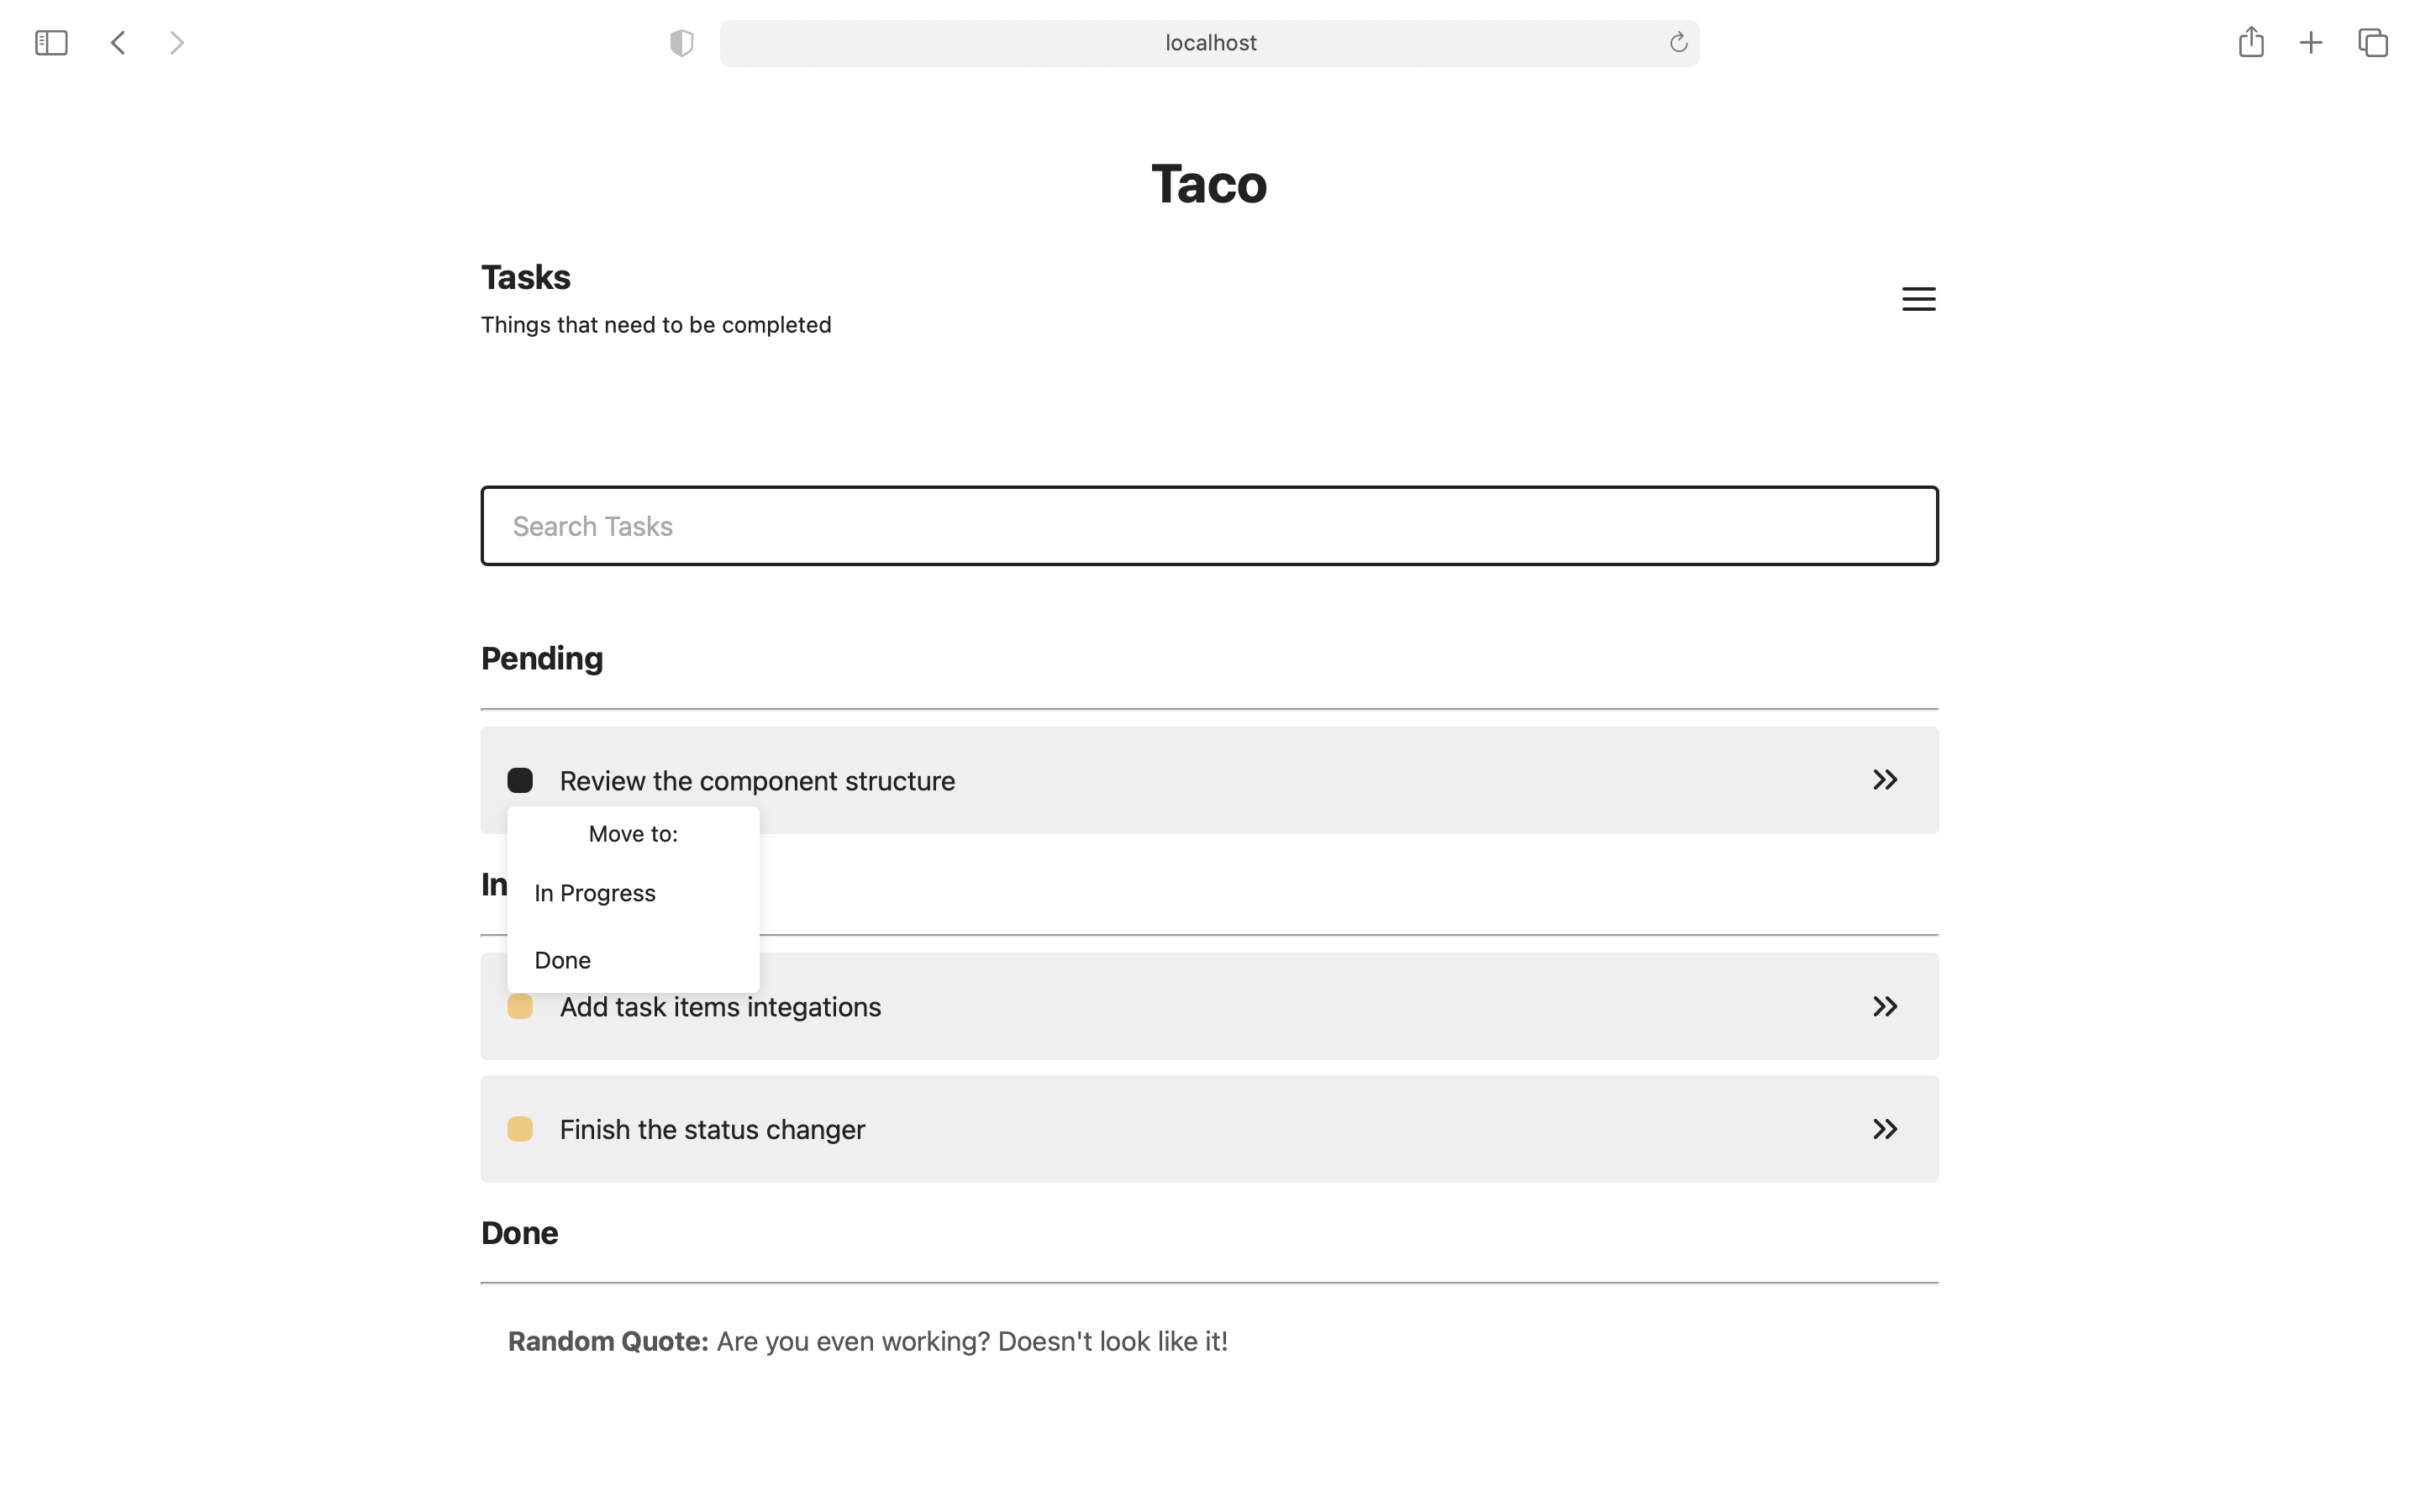 Preview Tasks Taco